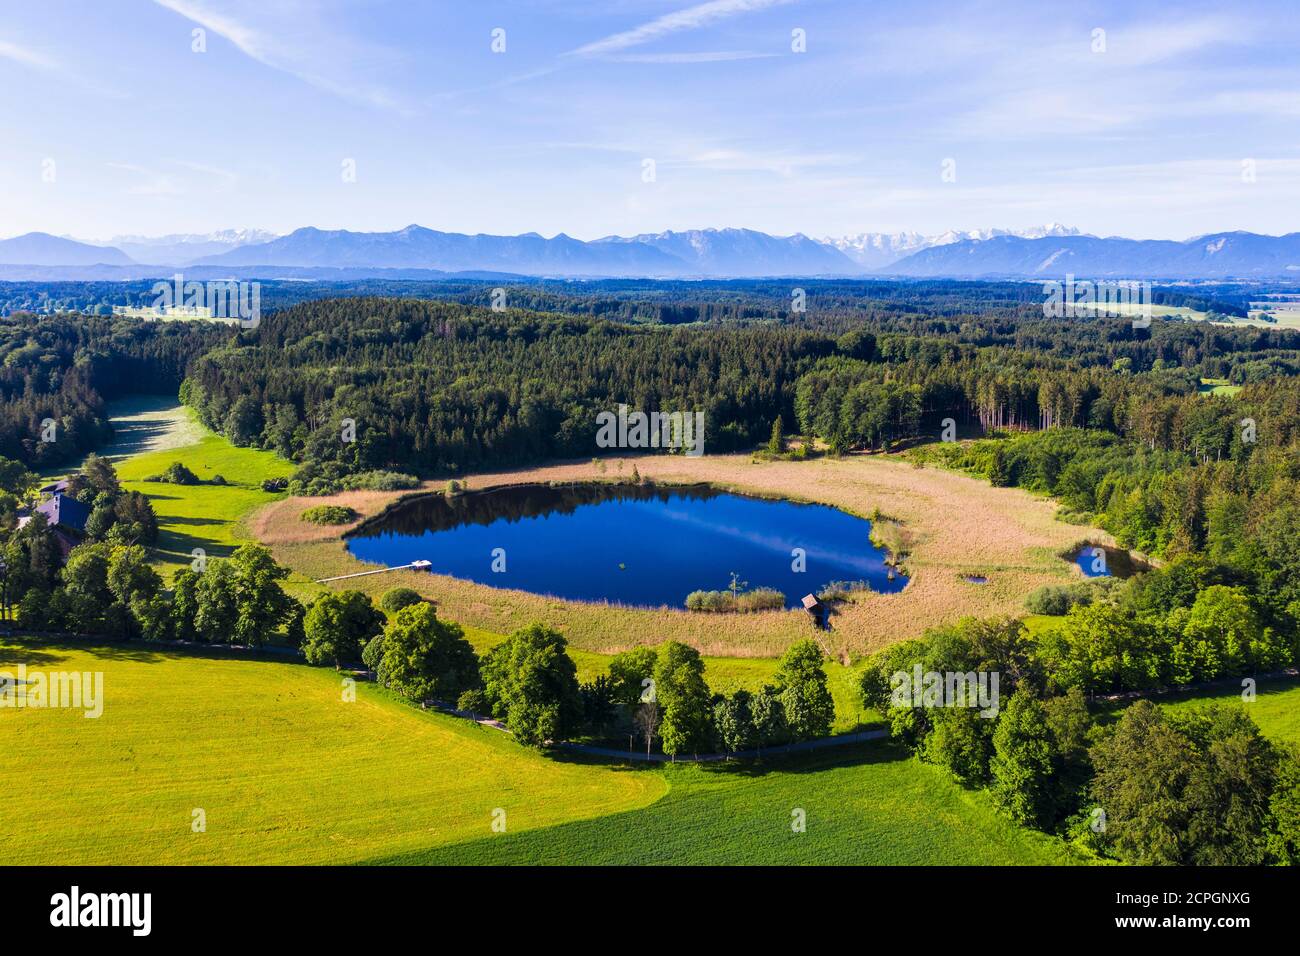 Rothsee, near Weilheim, Pfaffenwinkel, foothills of the Alps, drone recording, Upper Bavaria, Bavaria, Germany, Europe Stock Photo